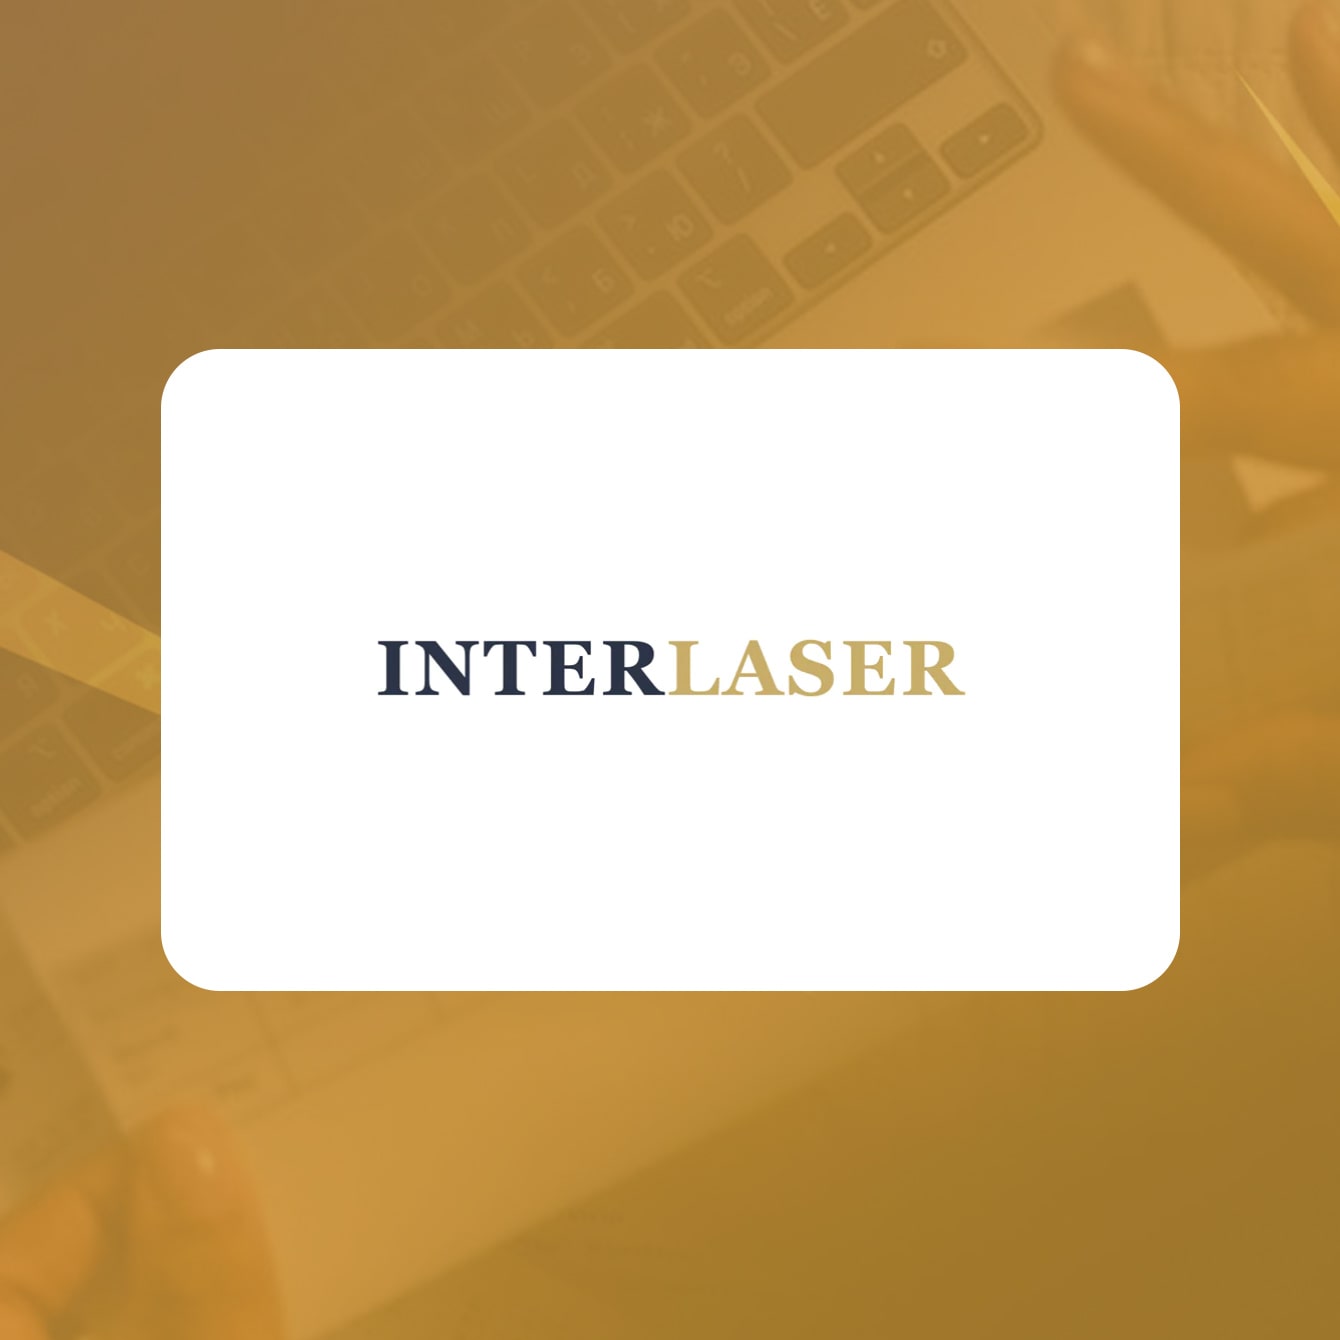 Interlaser software logo